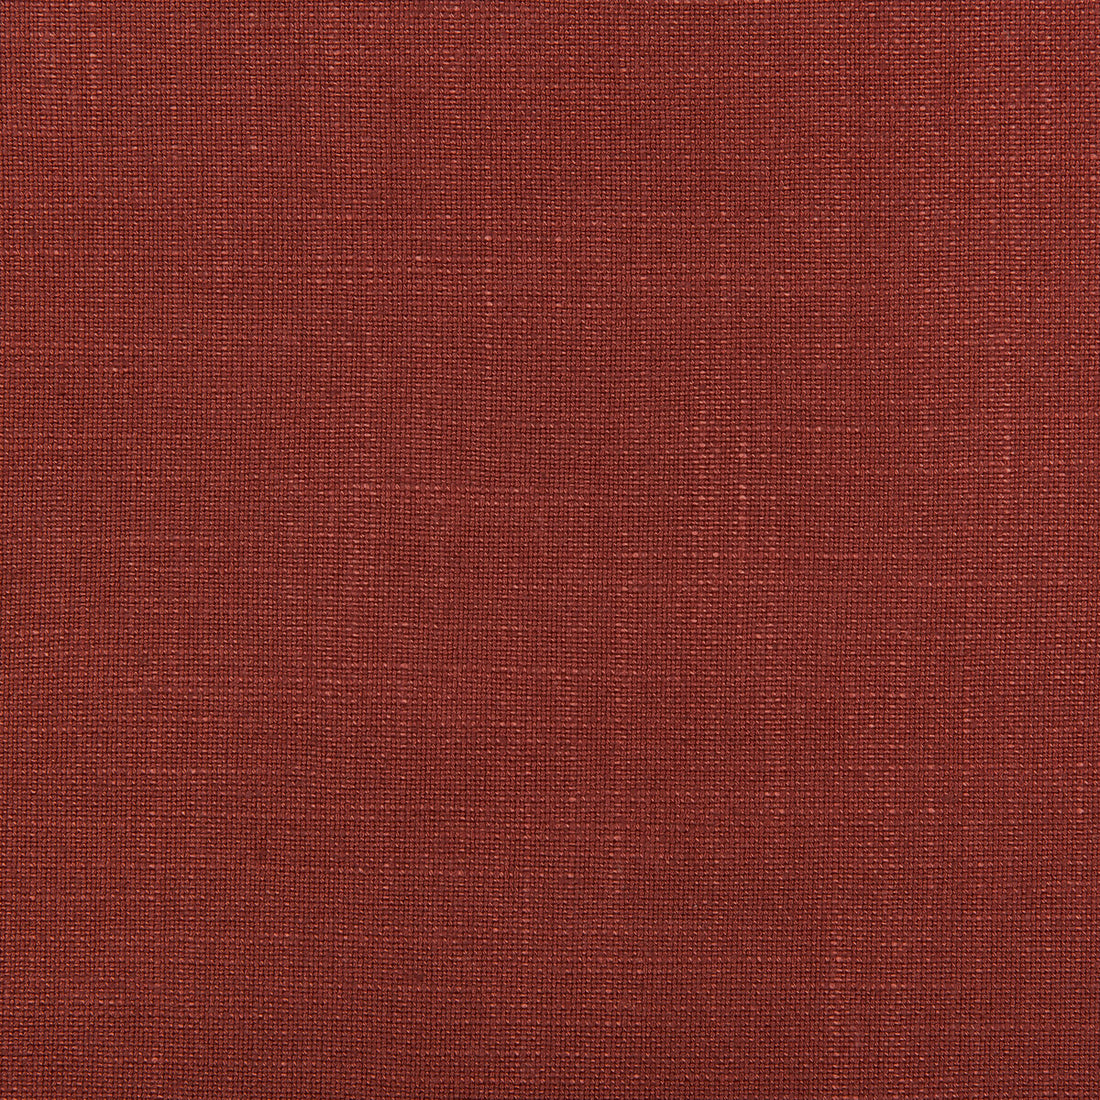 Aura fabric in paprika color - pattern 35520.9.0 - by Kravet Design